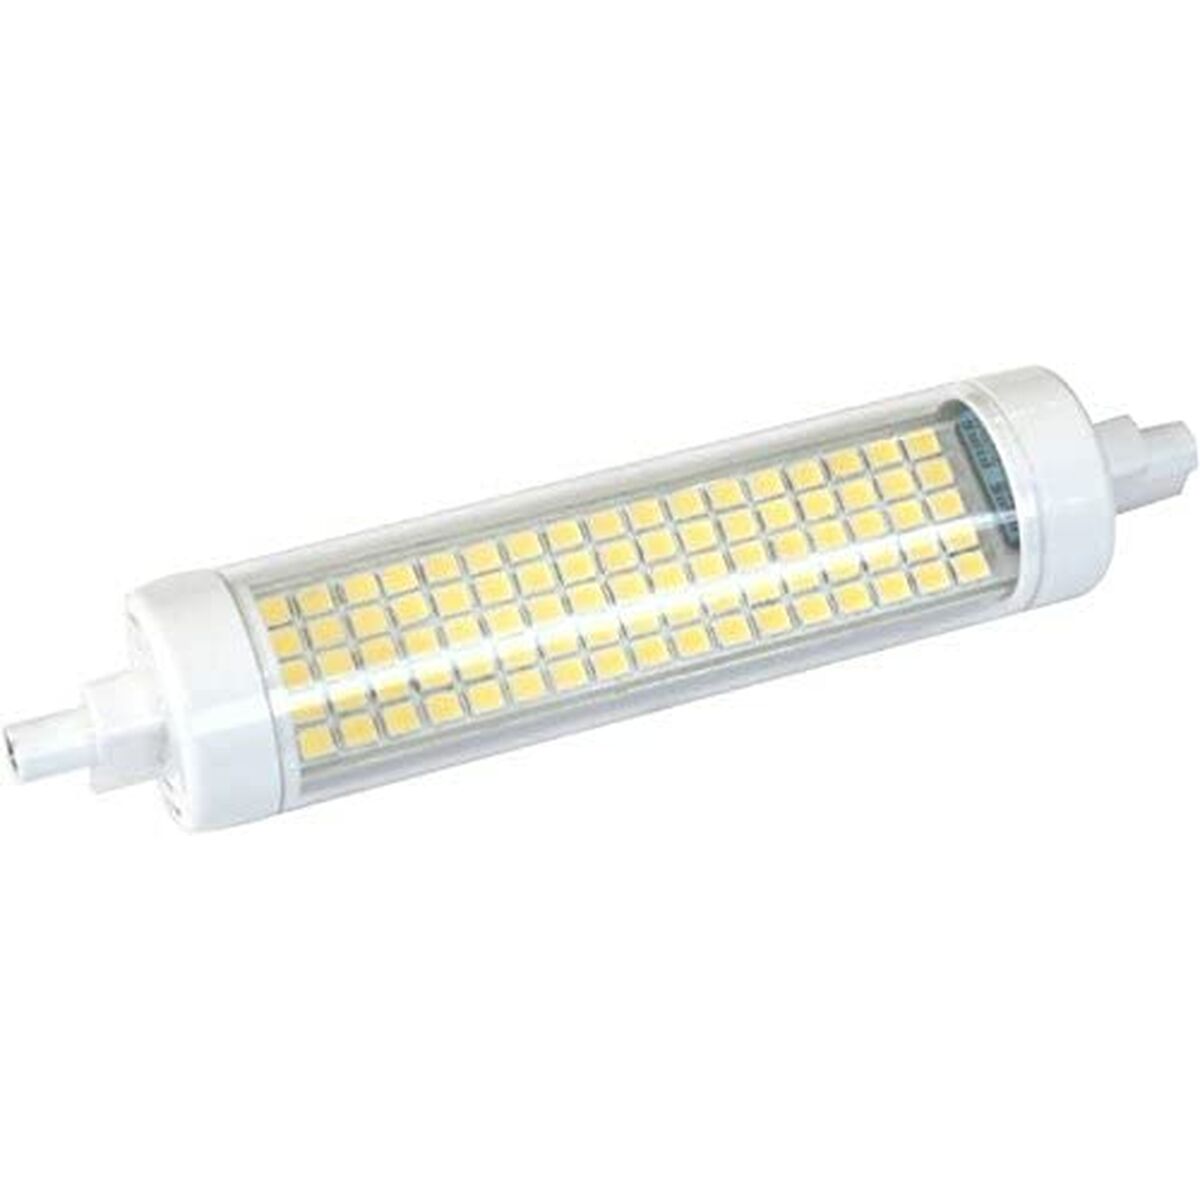 LED lamp Silver Electronics 130830 8W 3000K R7s